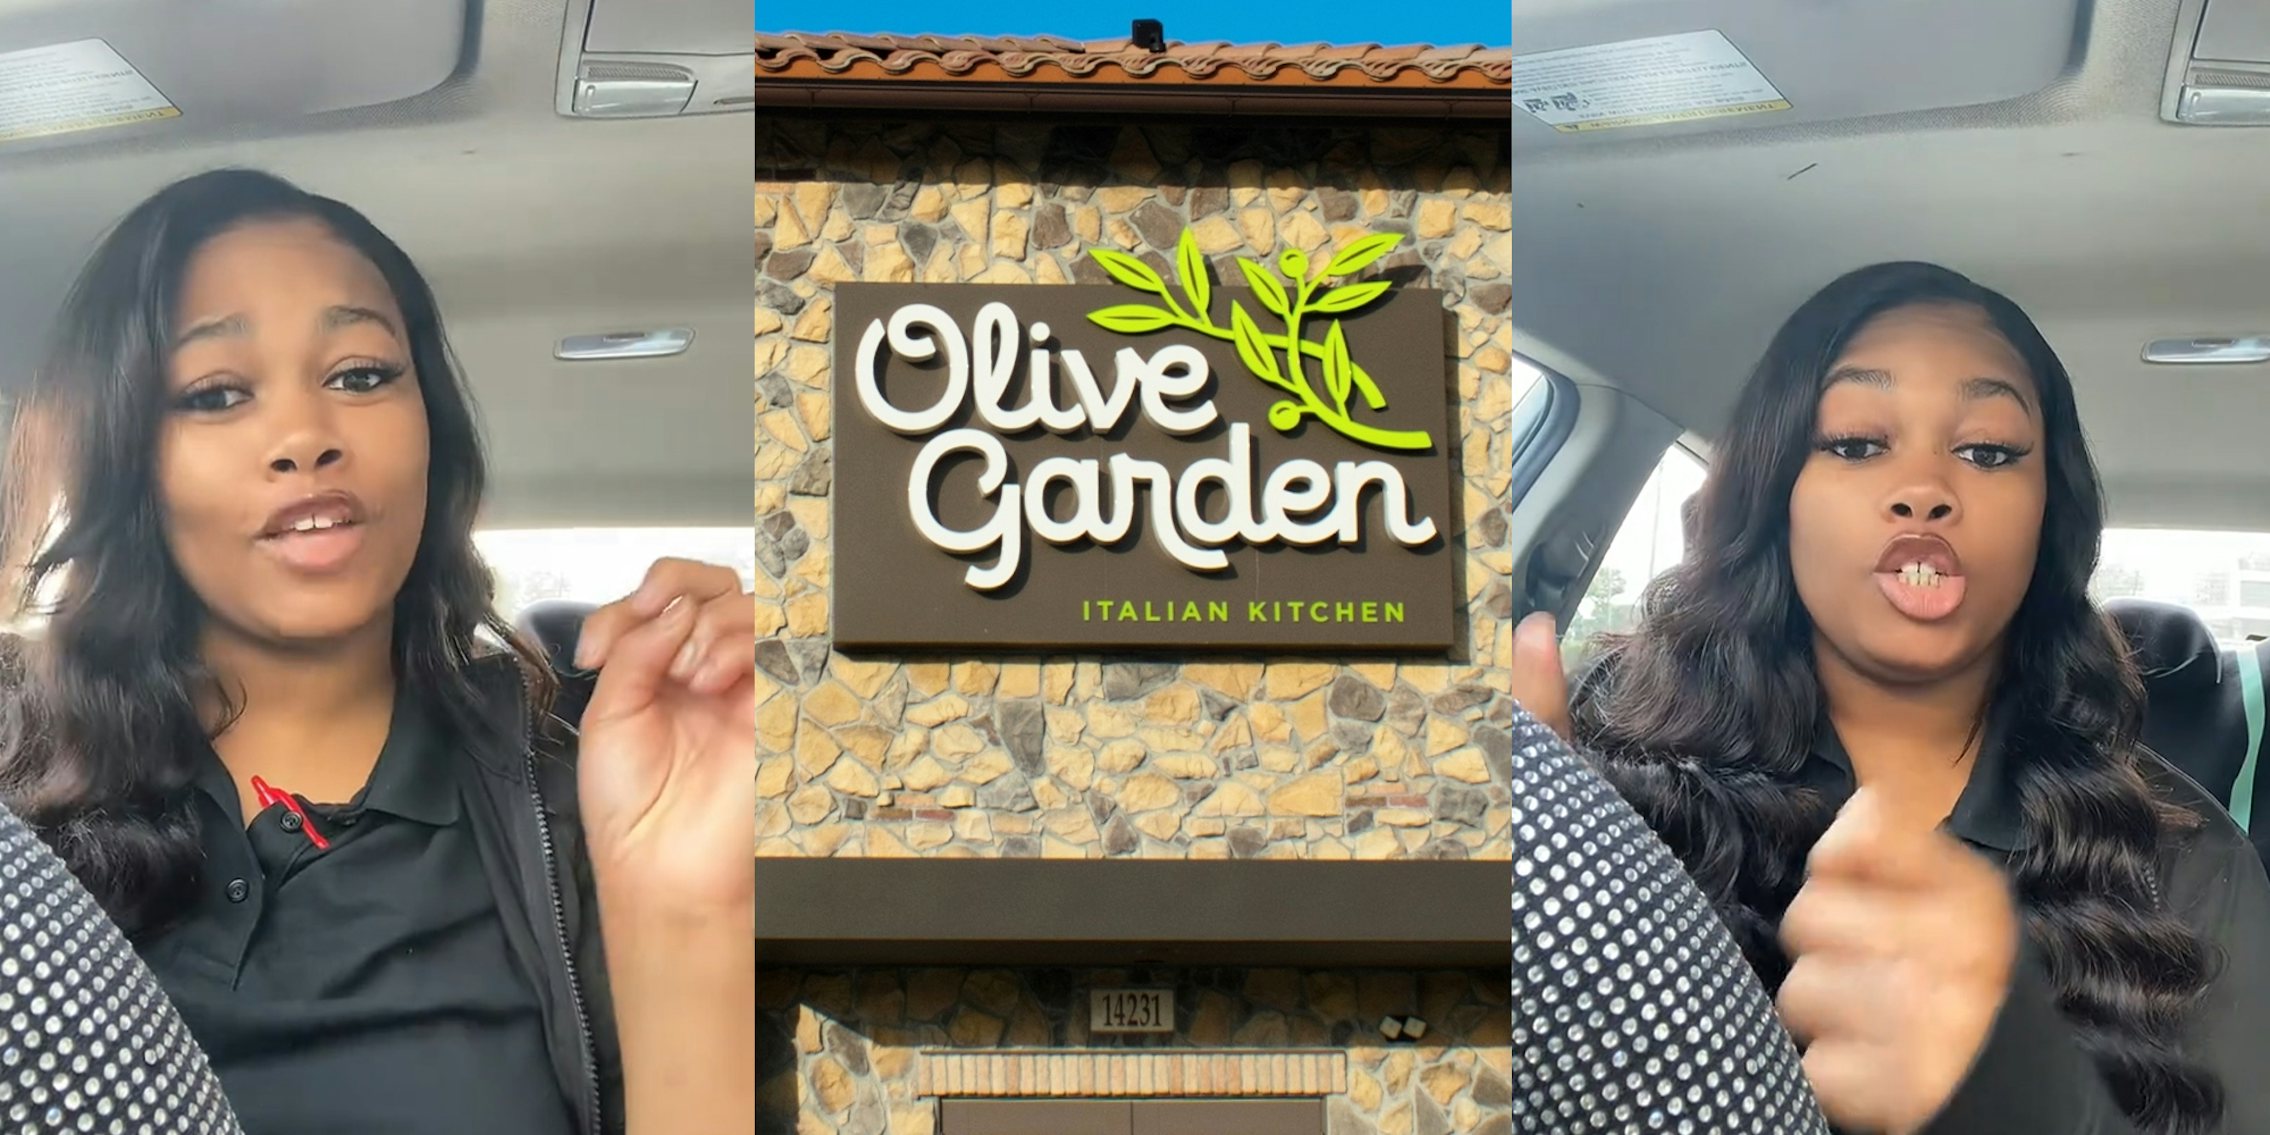 Oliver Garden hostess explains why she dislikes the call ahead option